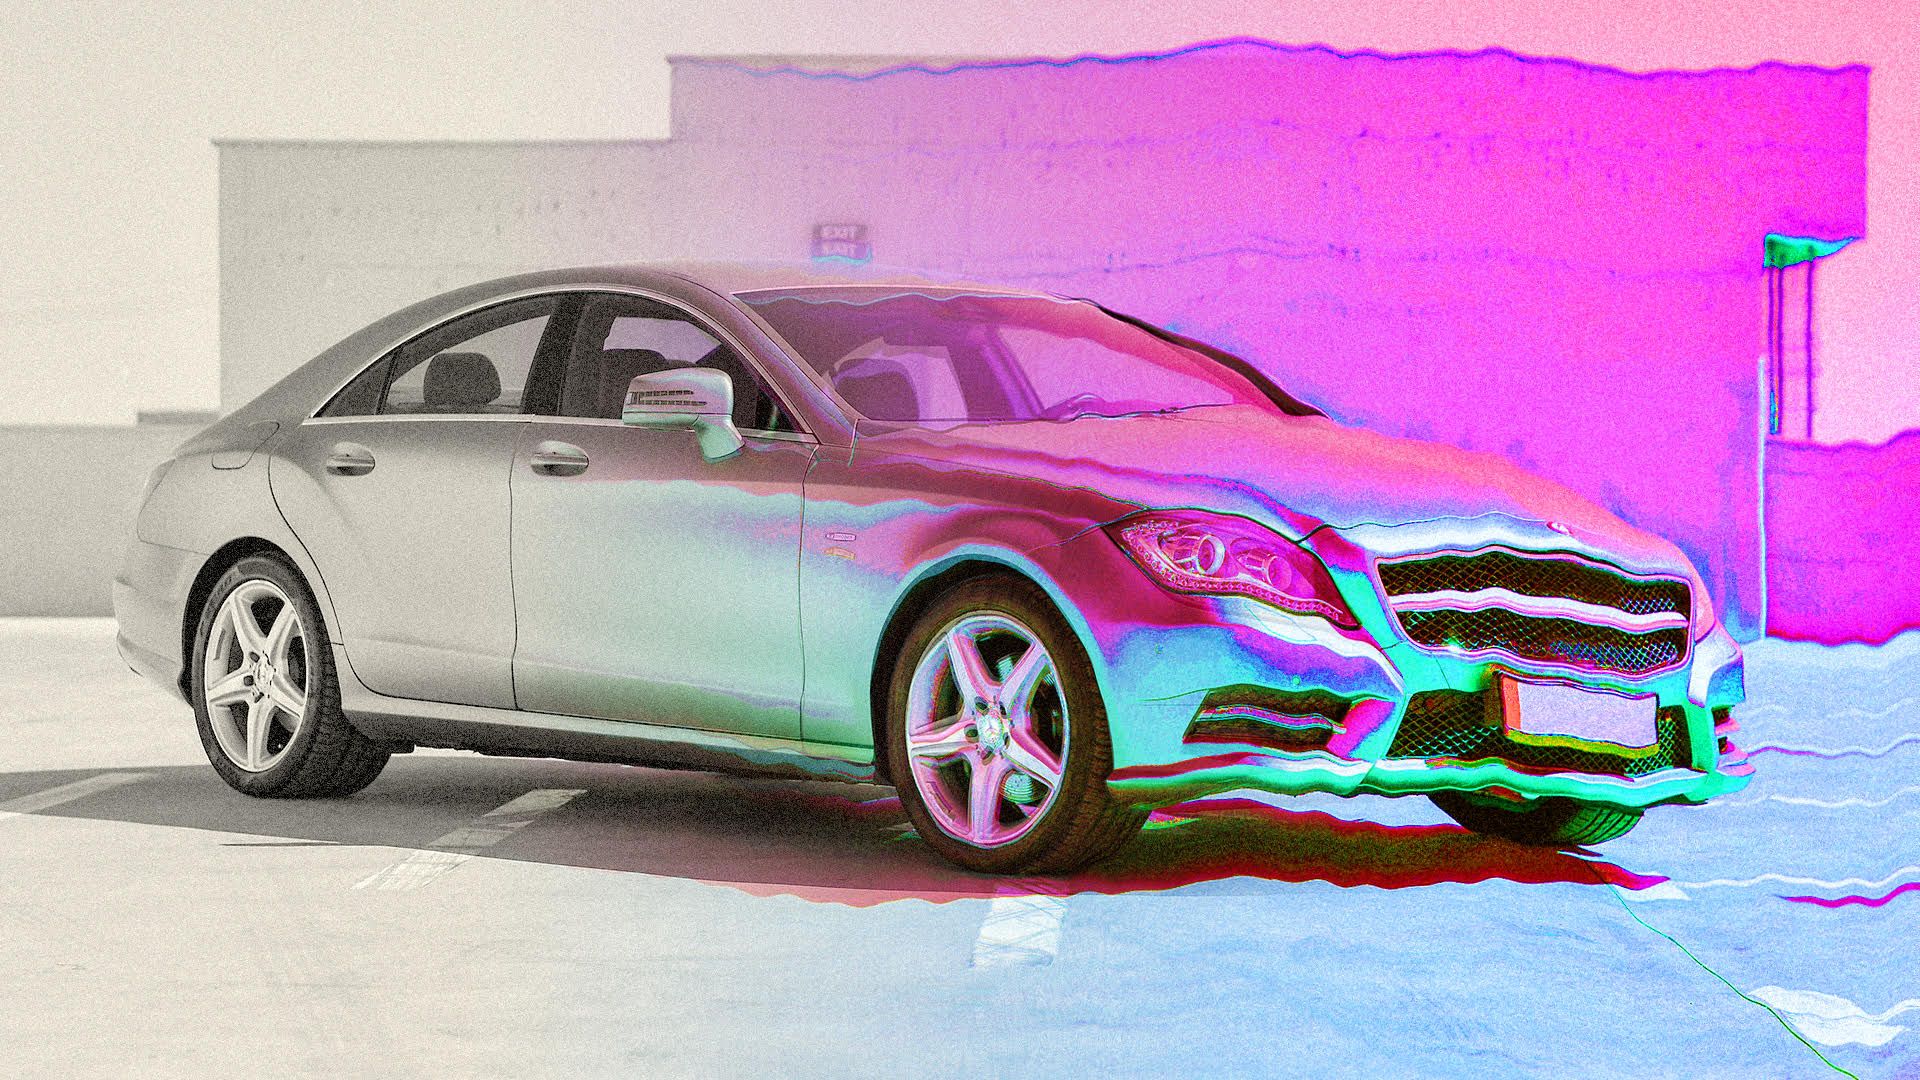 a photo of a car warping into rainbow hues suggestive of computer simulation